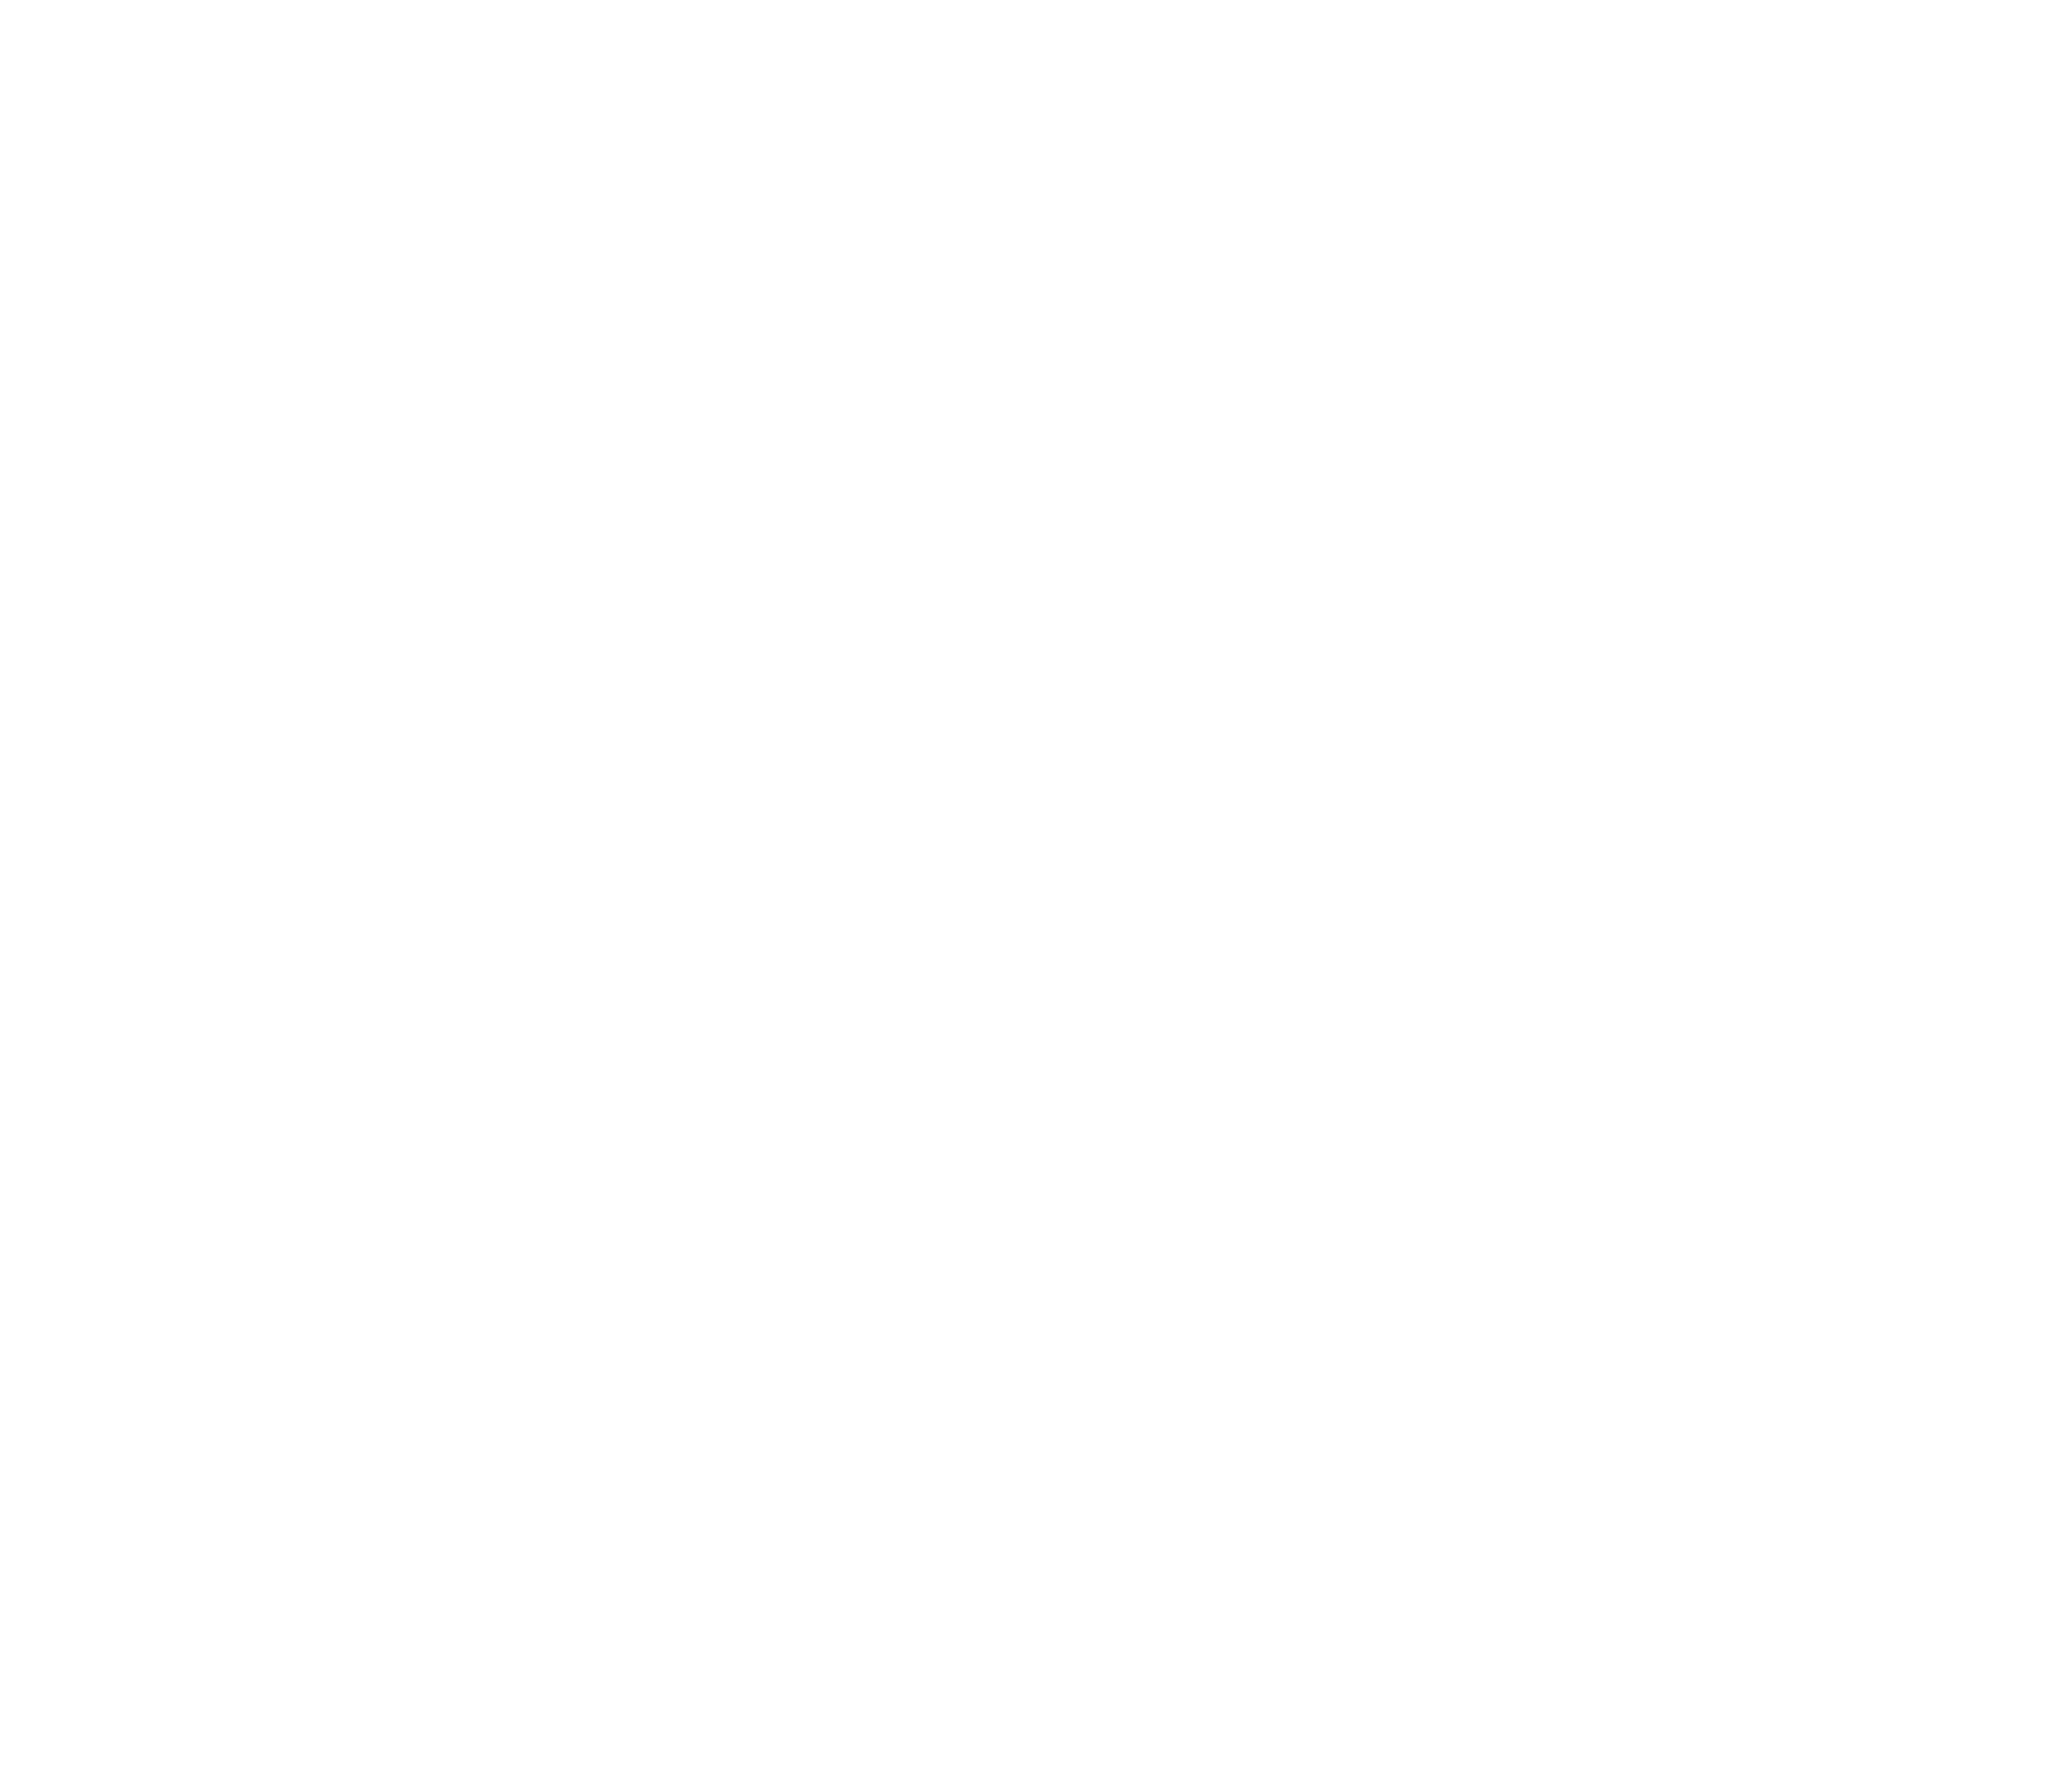 Melbournetraders